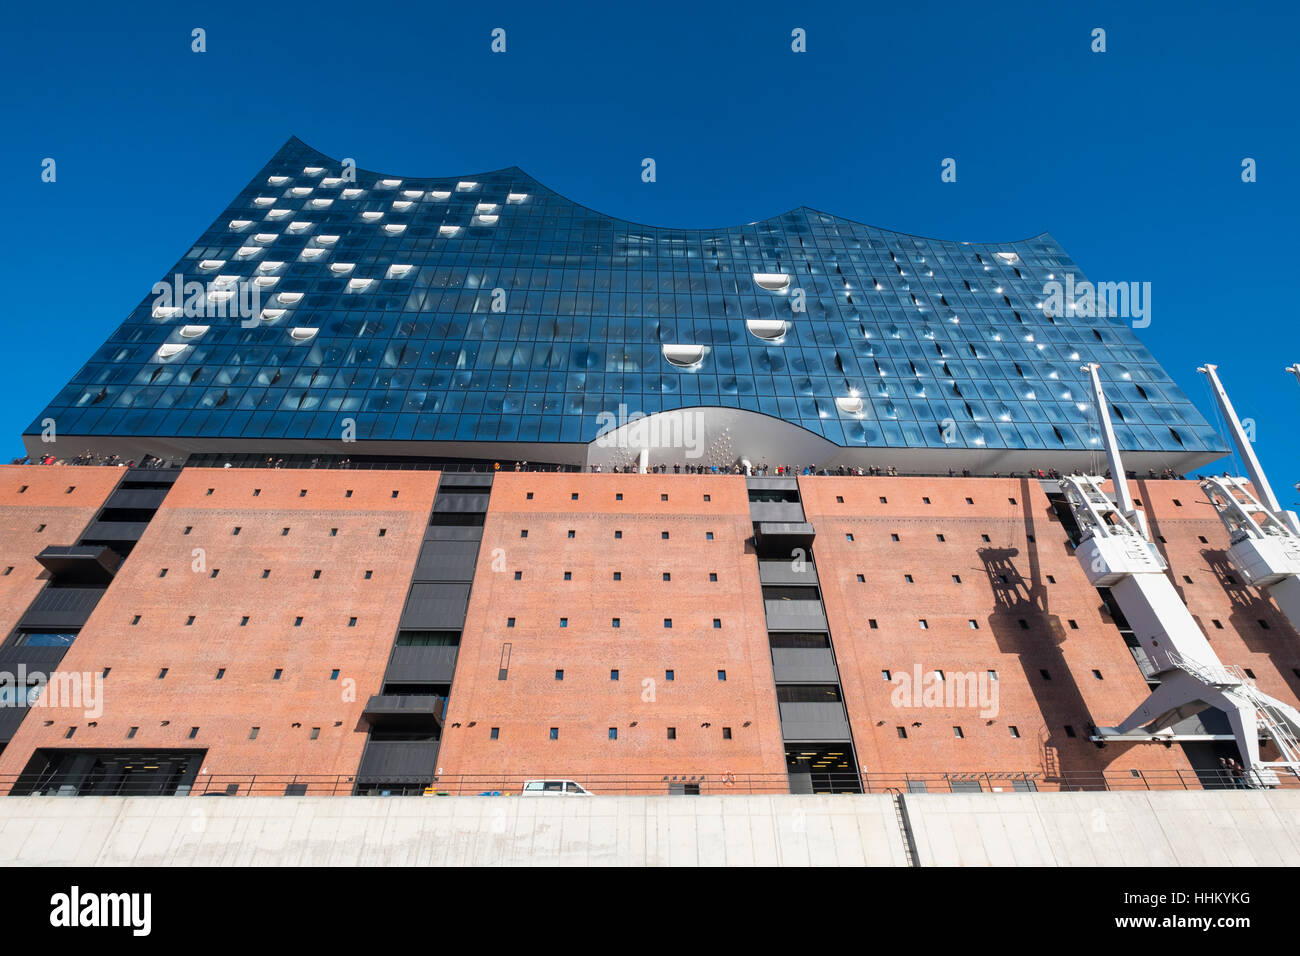 Elbphilharmonie, Hamburg, Germany; View of new Elbphilharmonie opera house in Hamburg, Germany. Stock Photo